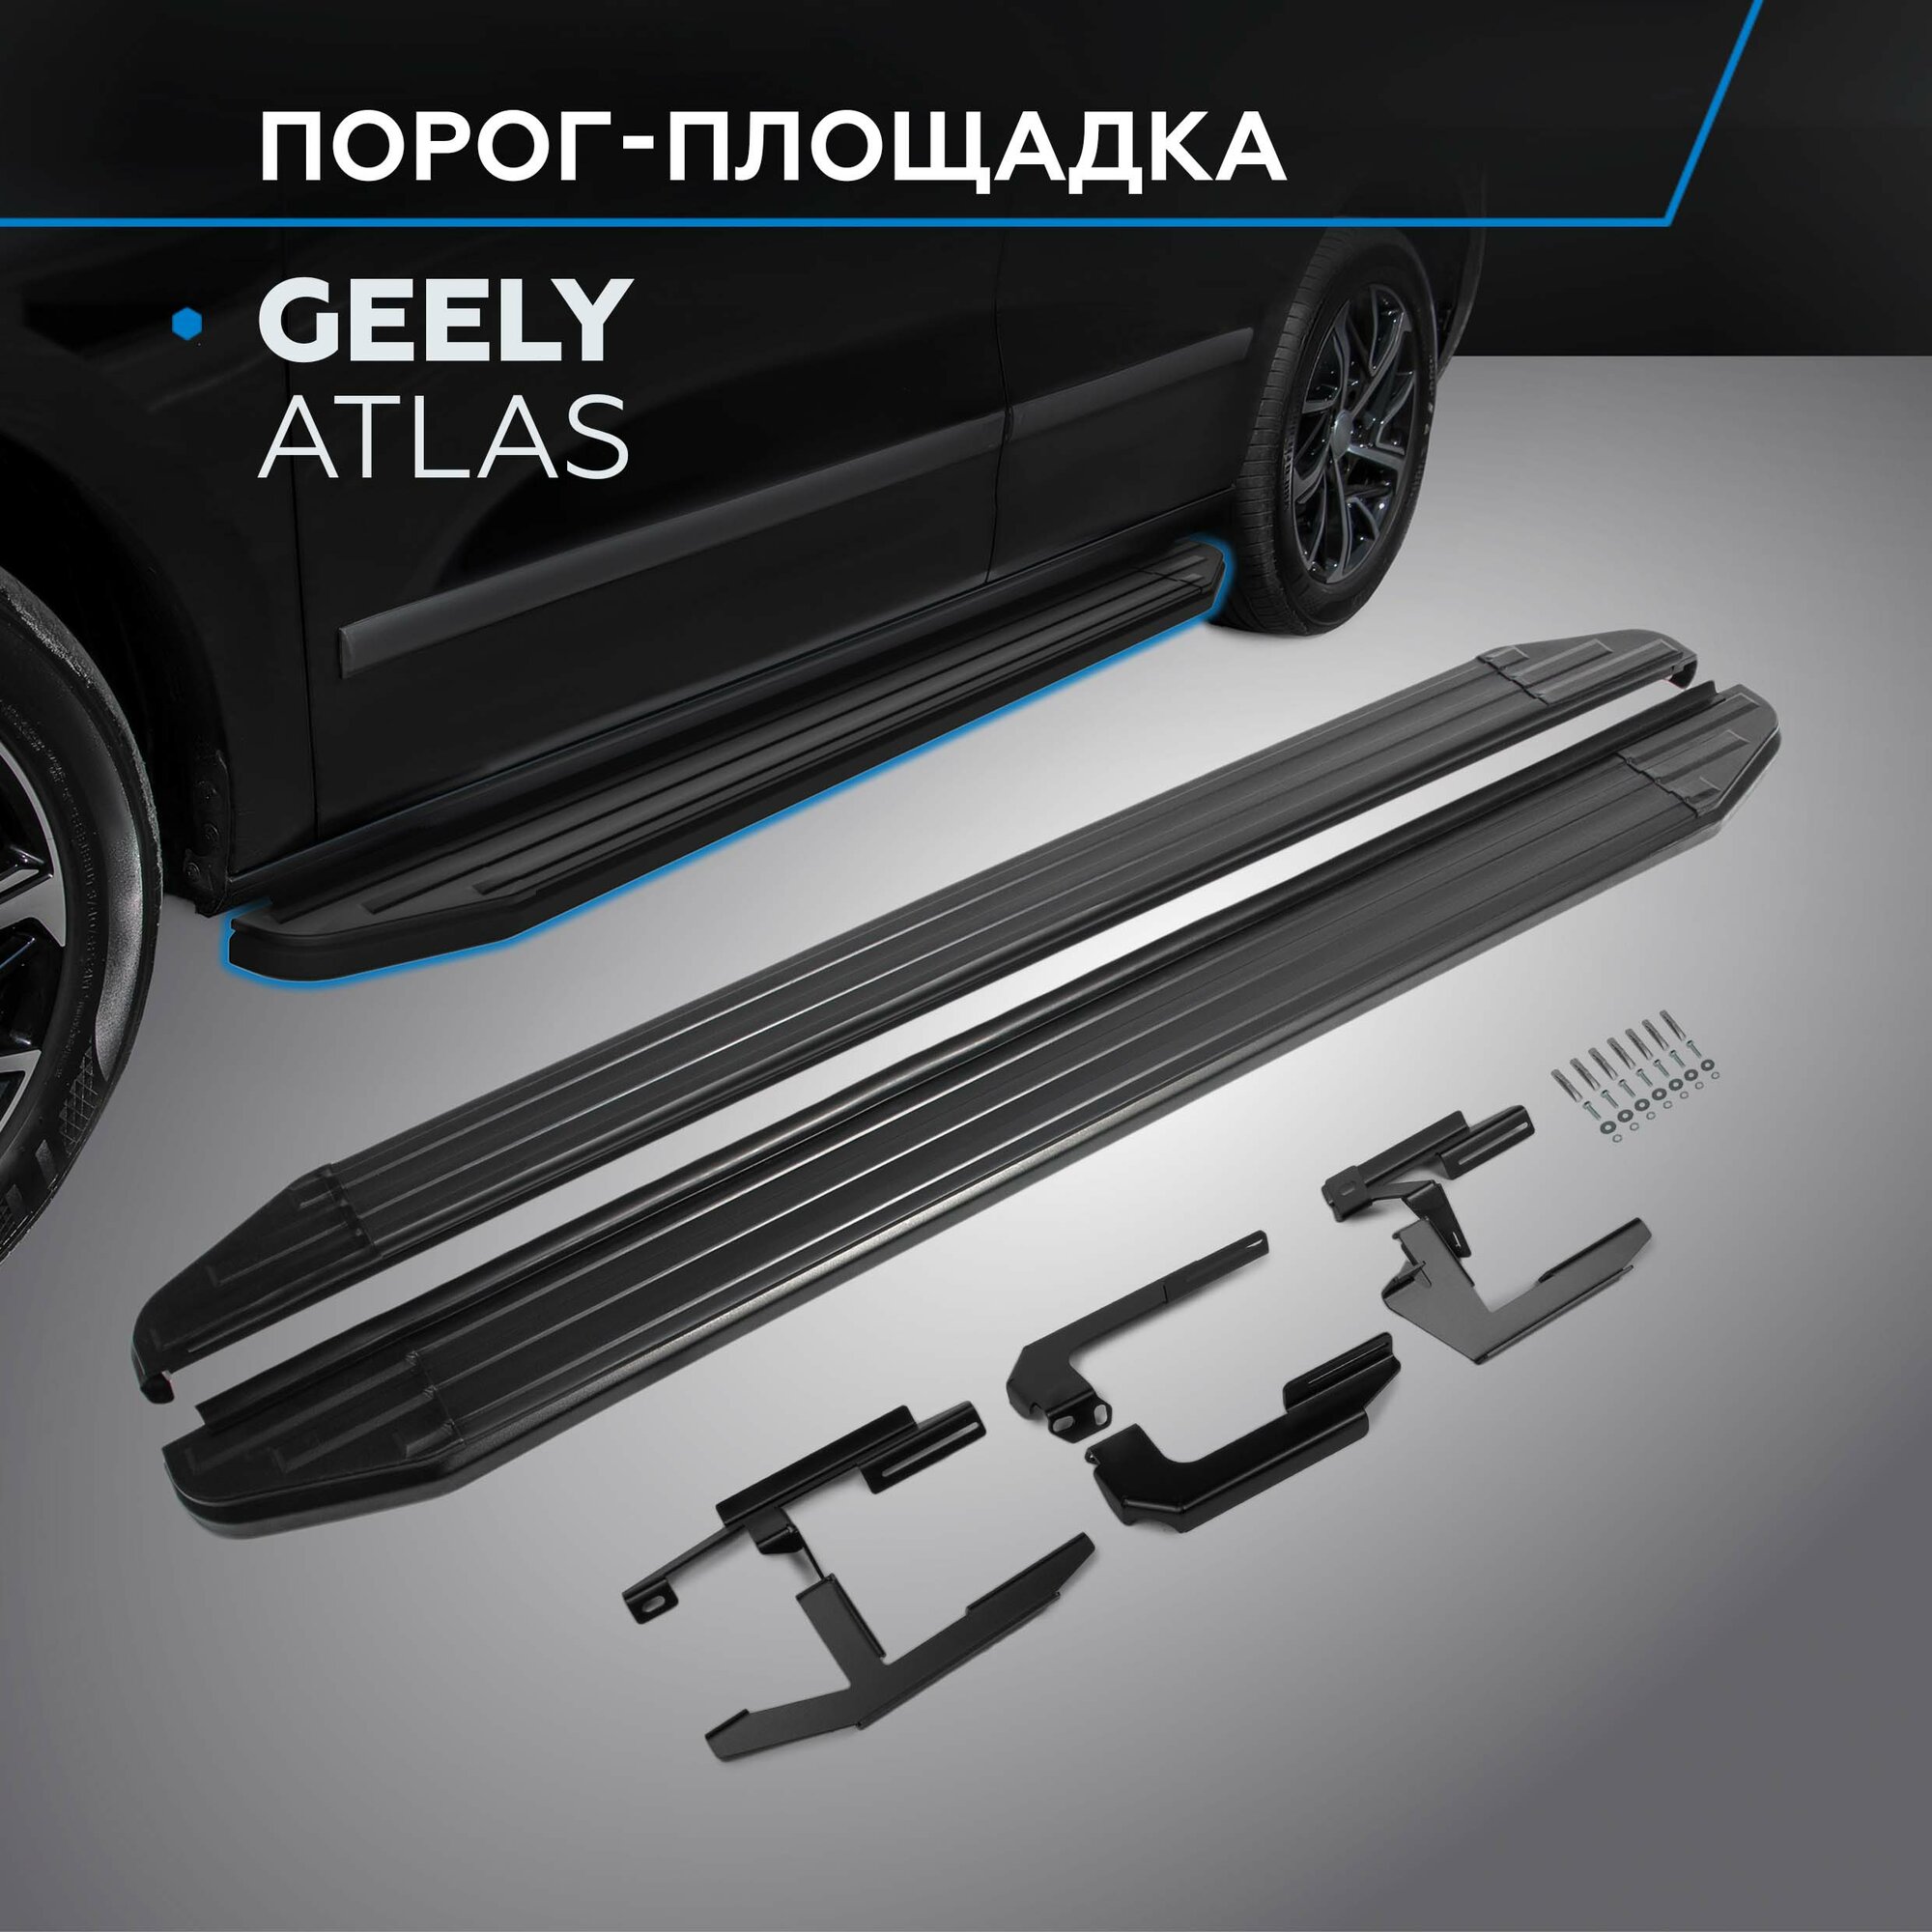 Пороги на автомобиль "Premium-Black" Rival для Geely Atlas 2018-н. в 173 см 2 шт алюминий A173ALB.1903.2